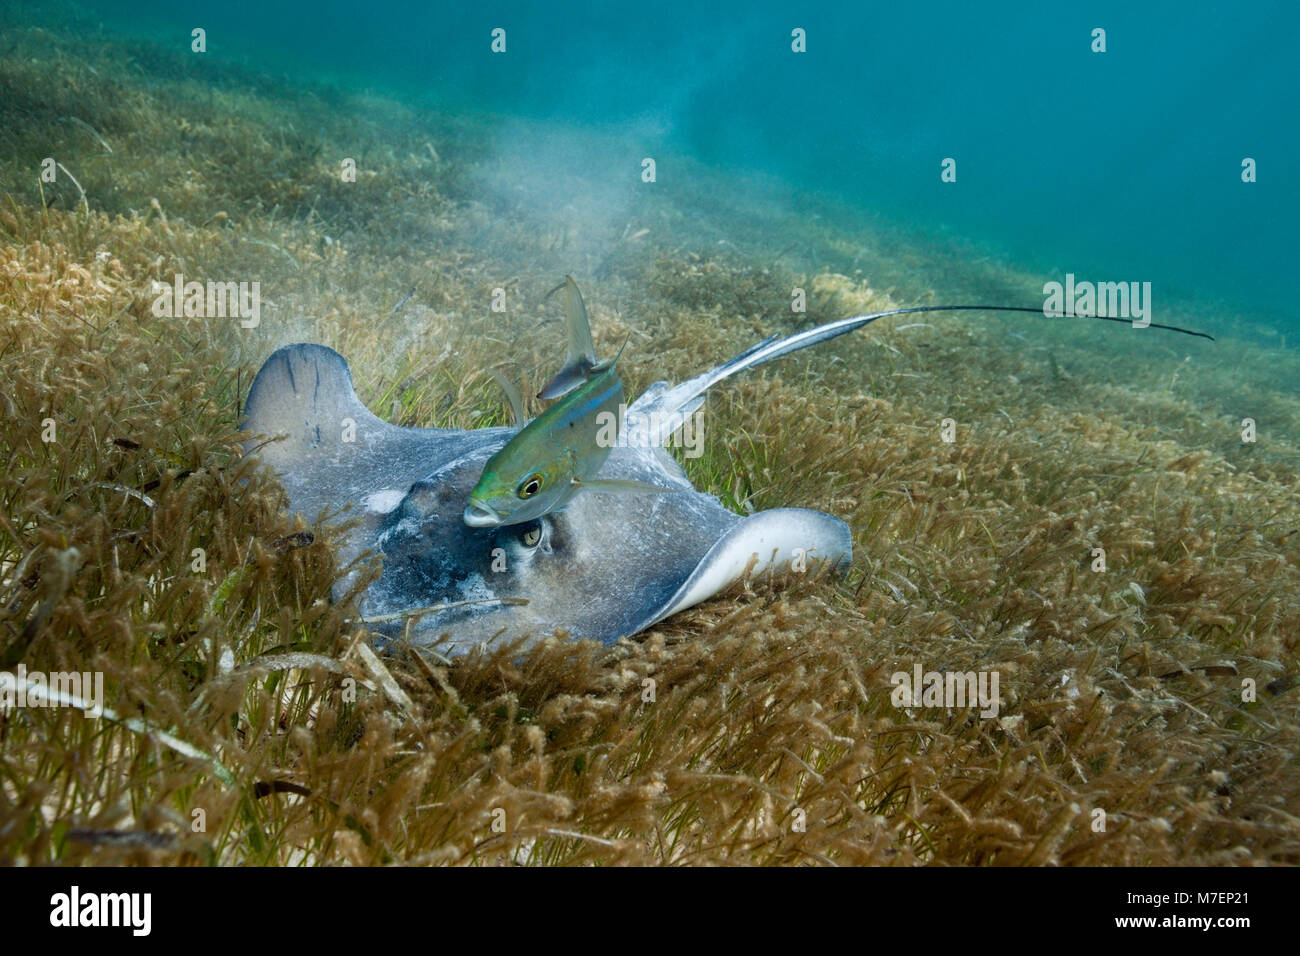 Southern Stingray on Seagrass, Dasyatis americana, Akumal, Tulum, Mexico Stock Photo